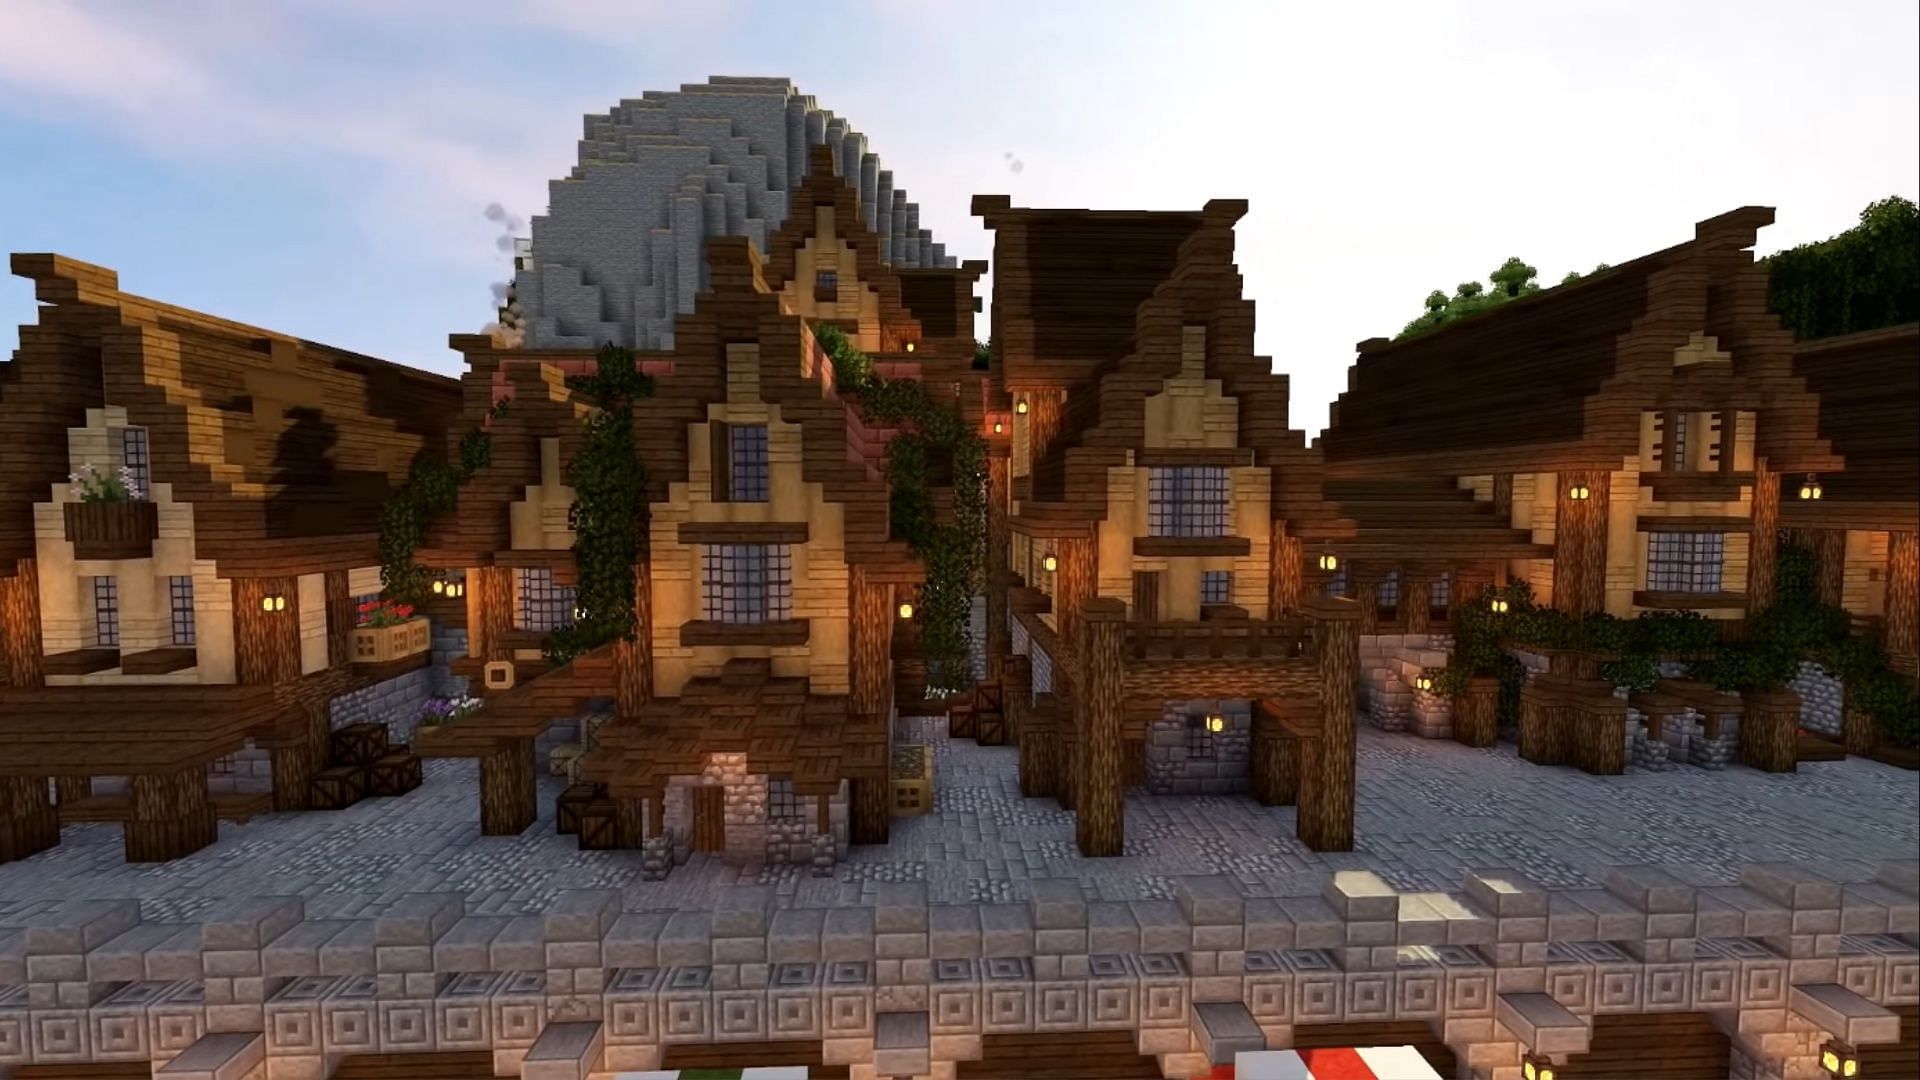 Medieval Town in-game (Image via Mojang Studios)